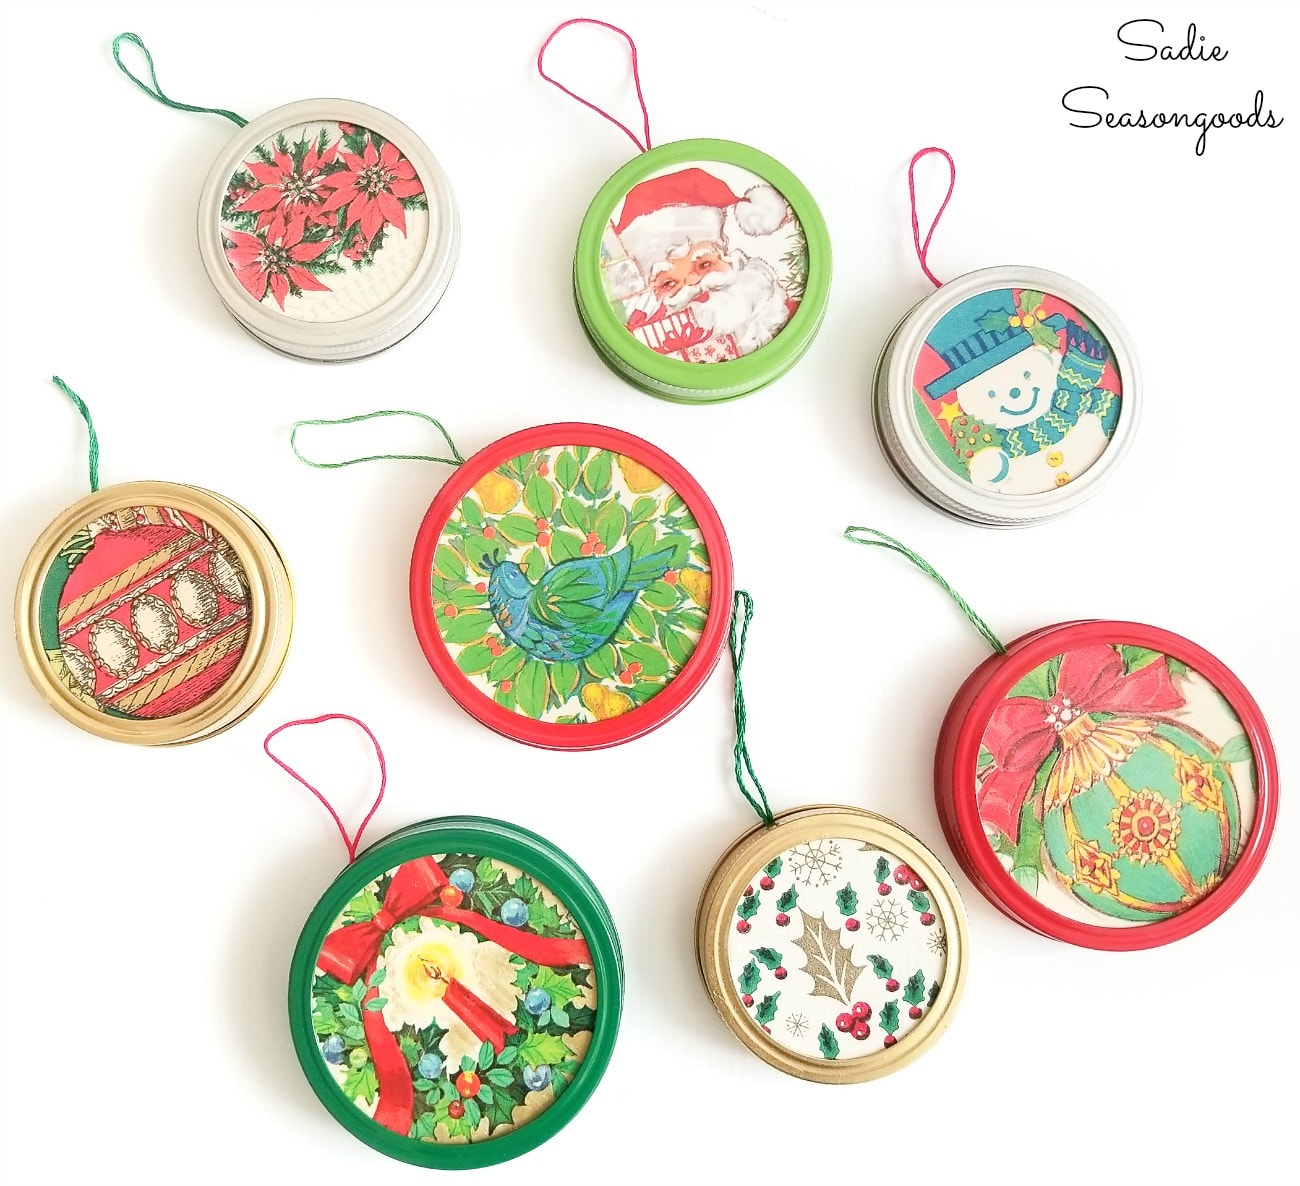 Mason jar lid ornaments as a Christmas craft idea